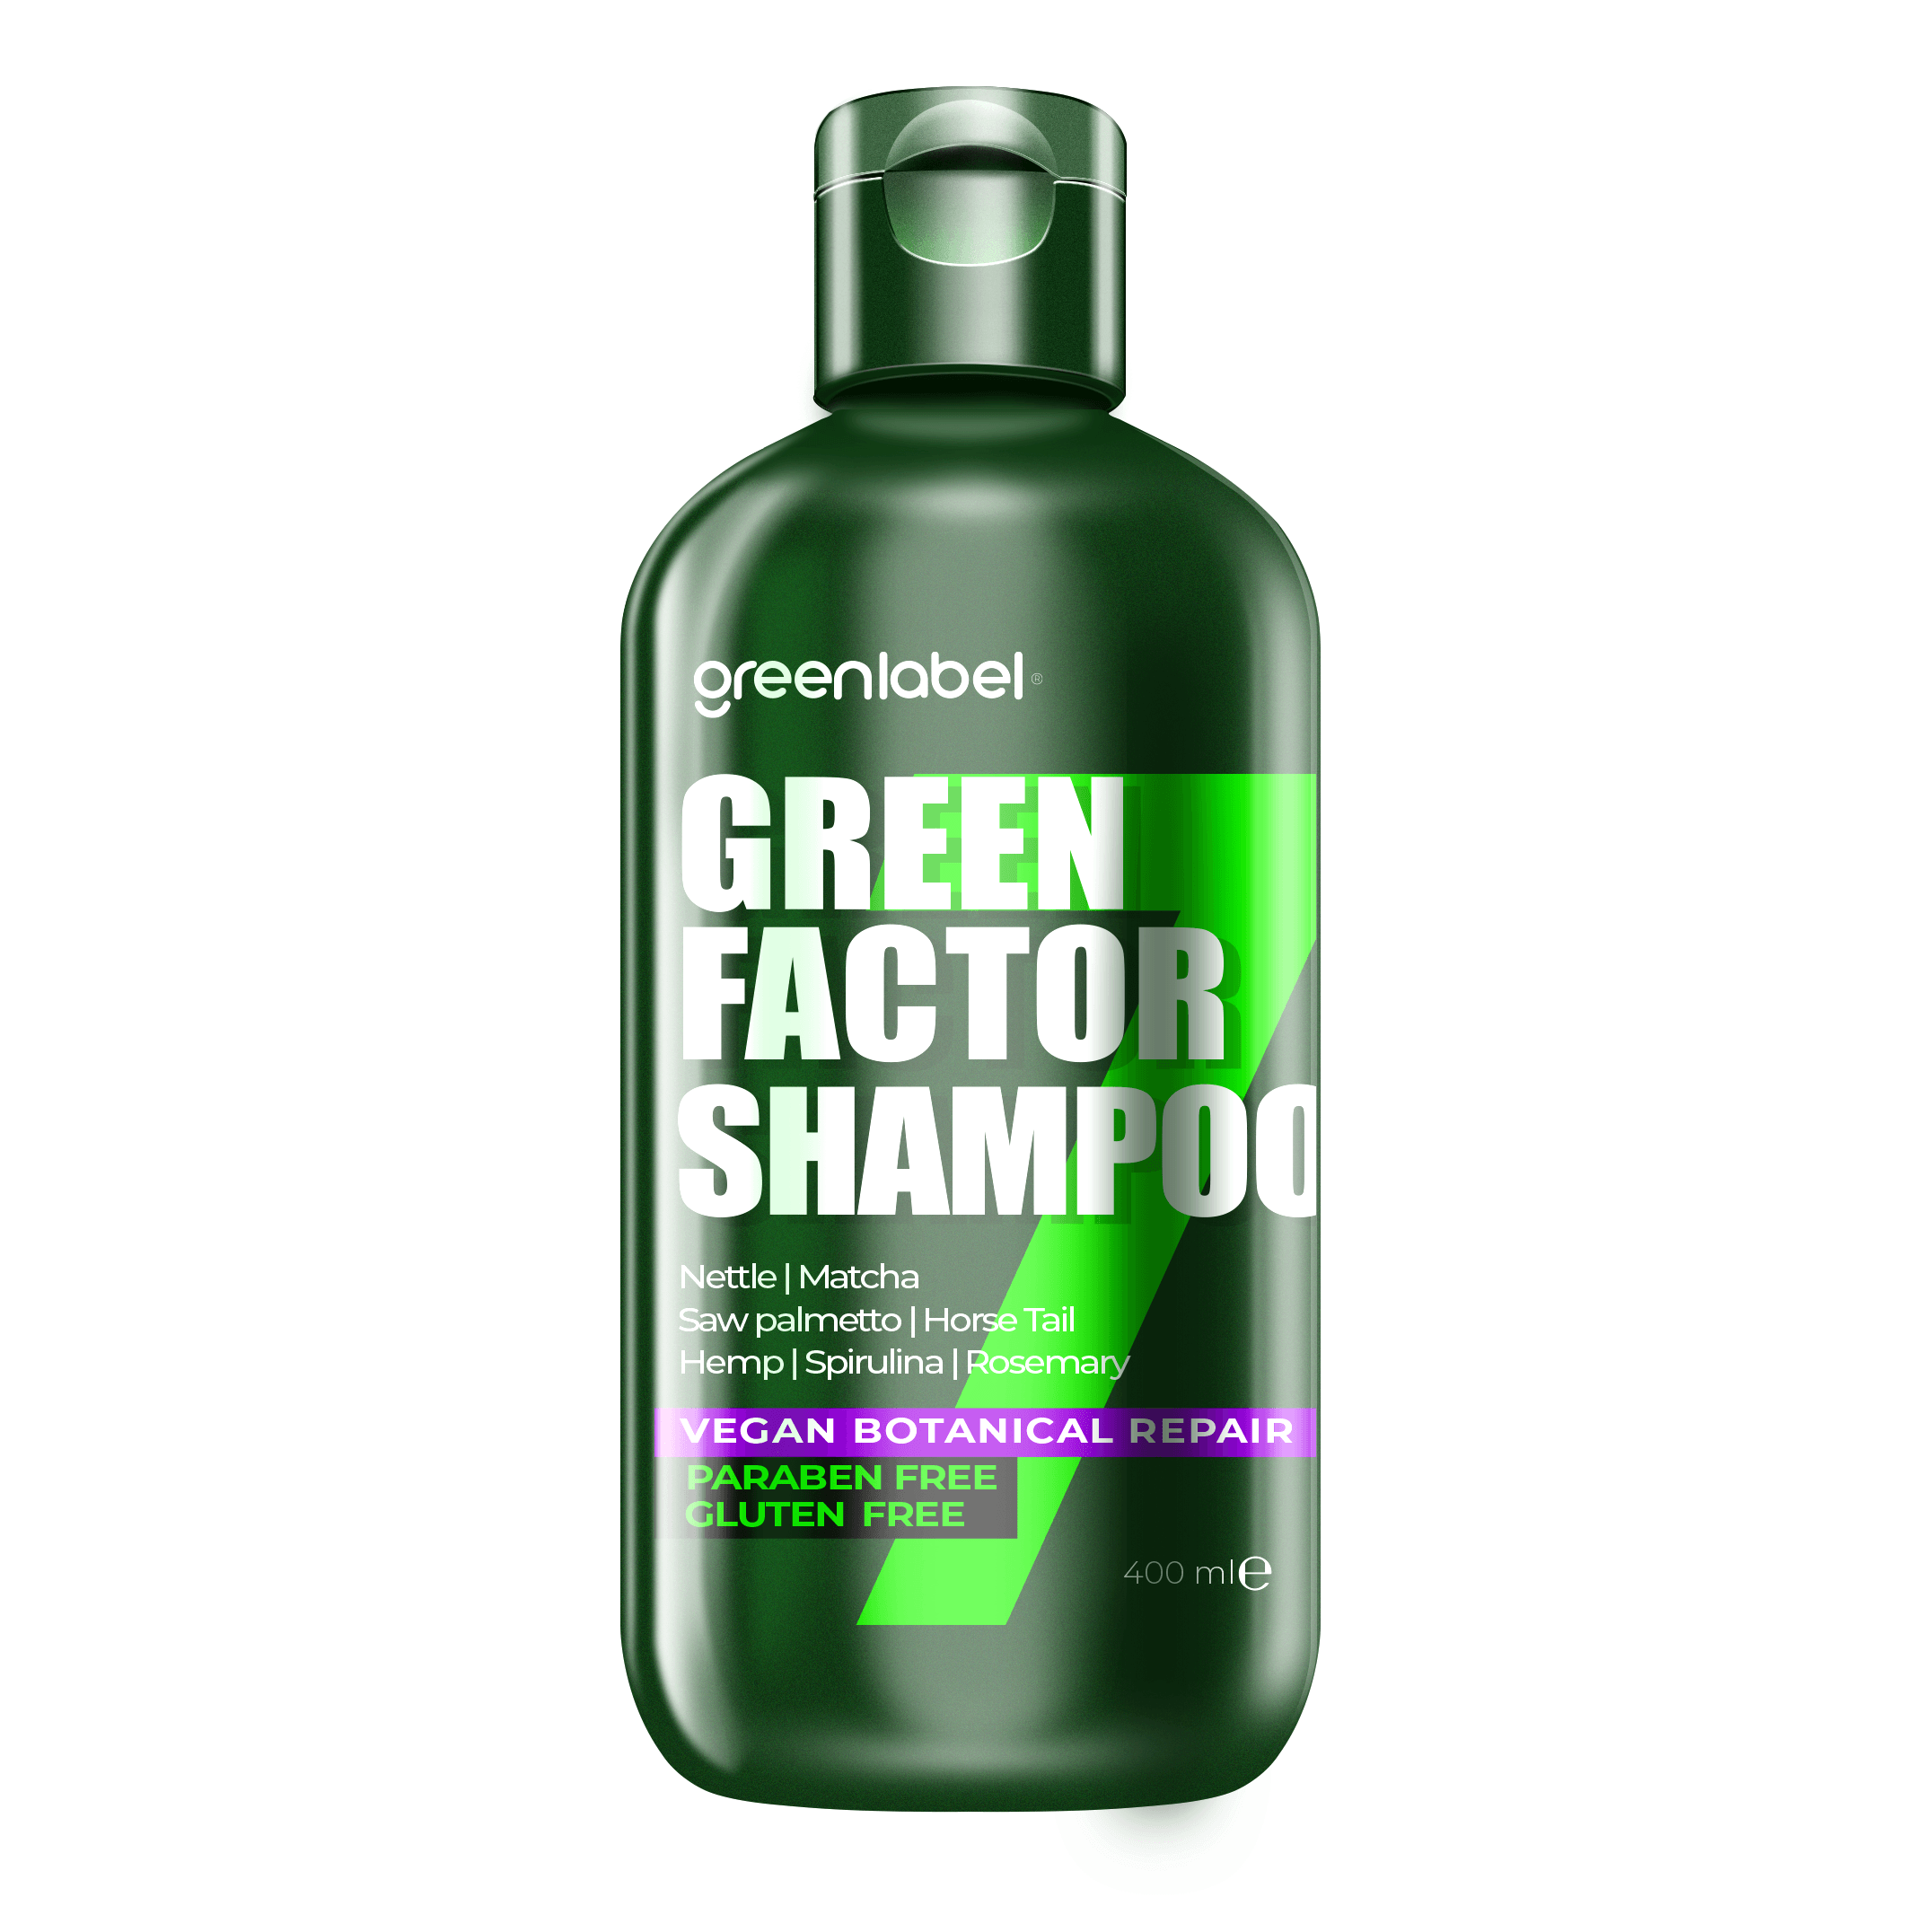 Green Factor 7 Herbal Vegan Paraben-Free Gluten-Free Repairing and Intensive Care Shampoo 400ml. main variant image